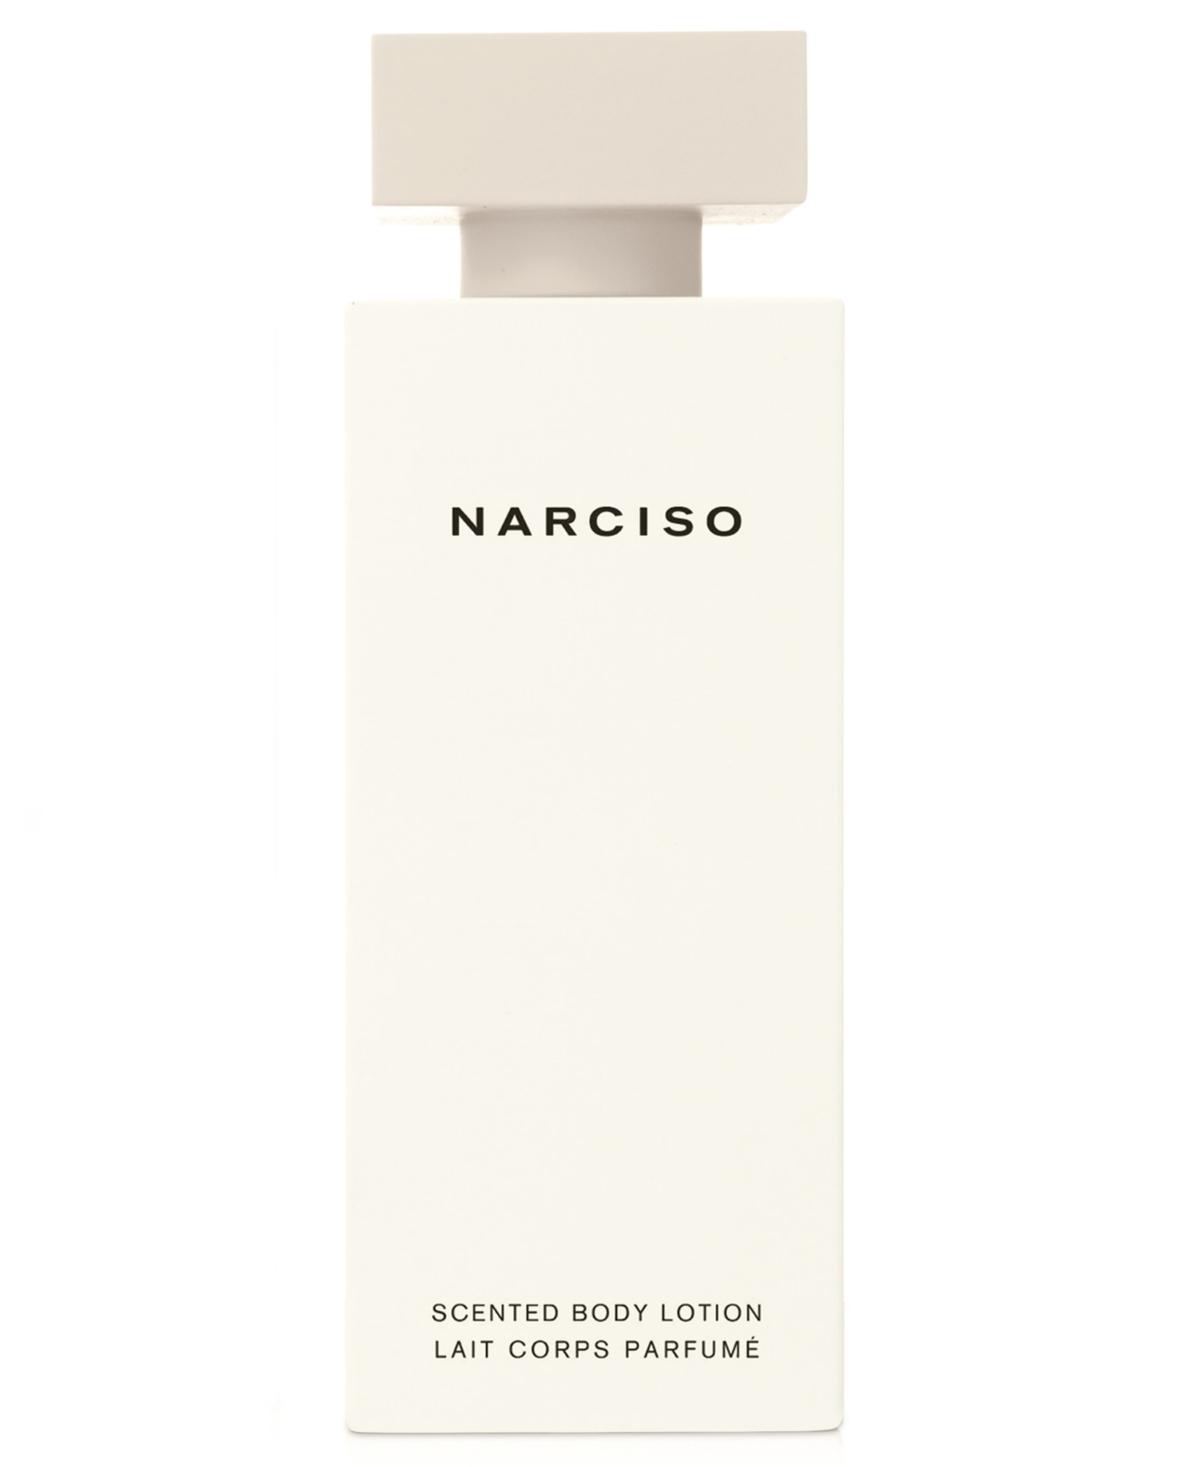 Narciso body lotion, 6.7 oz